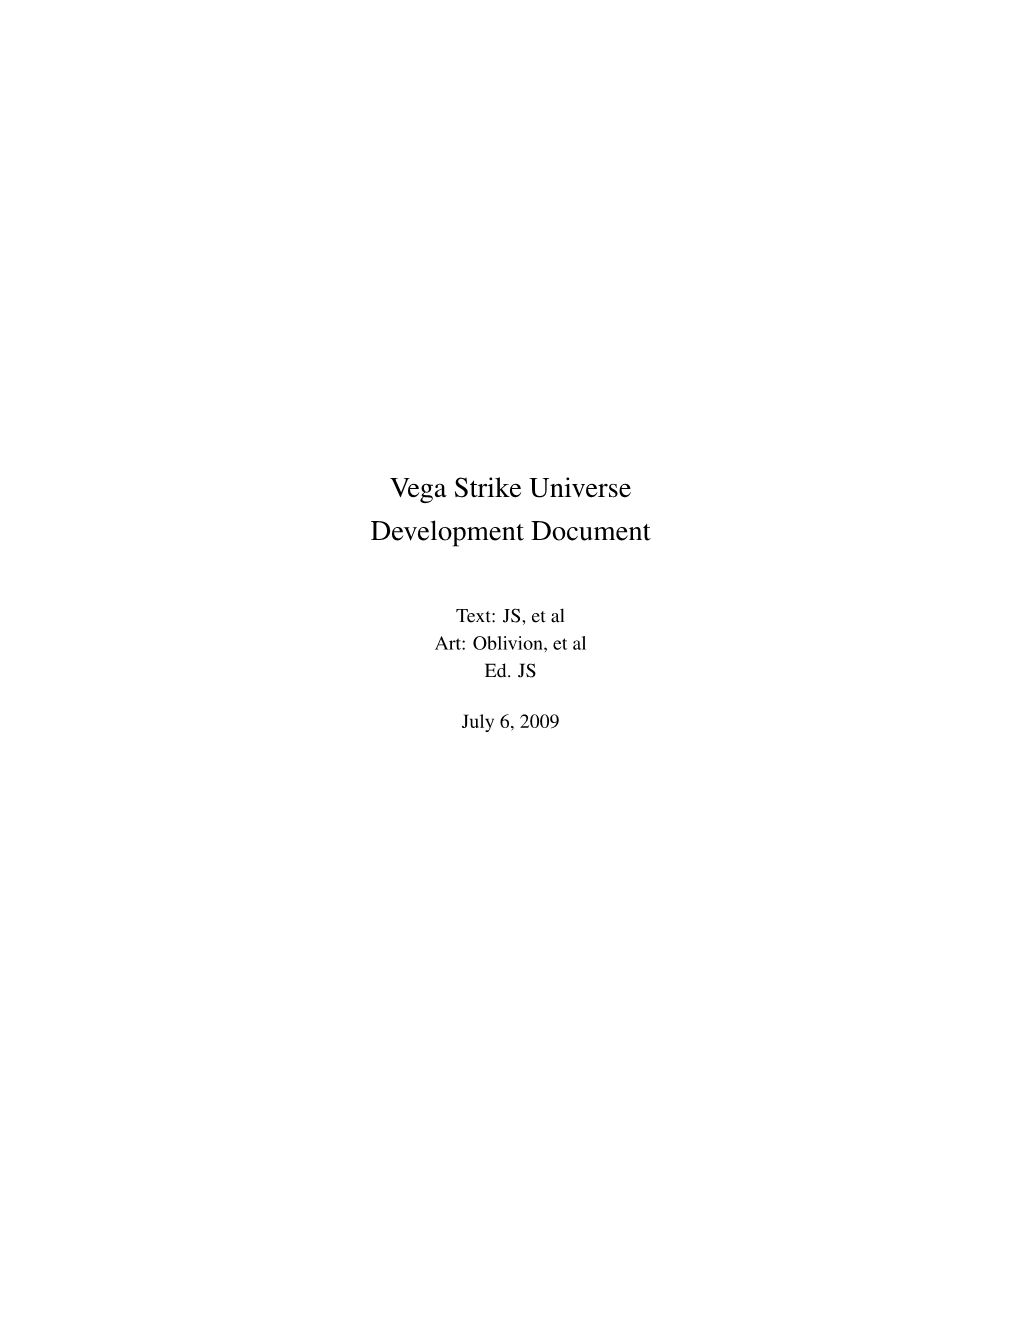 Vega Strike Universe Development Document